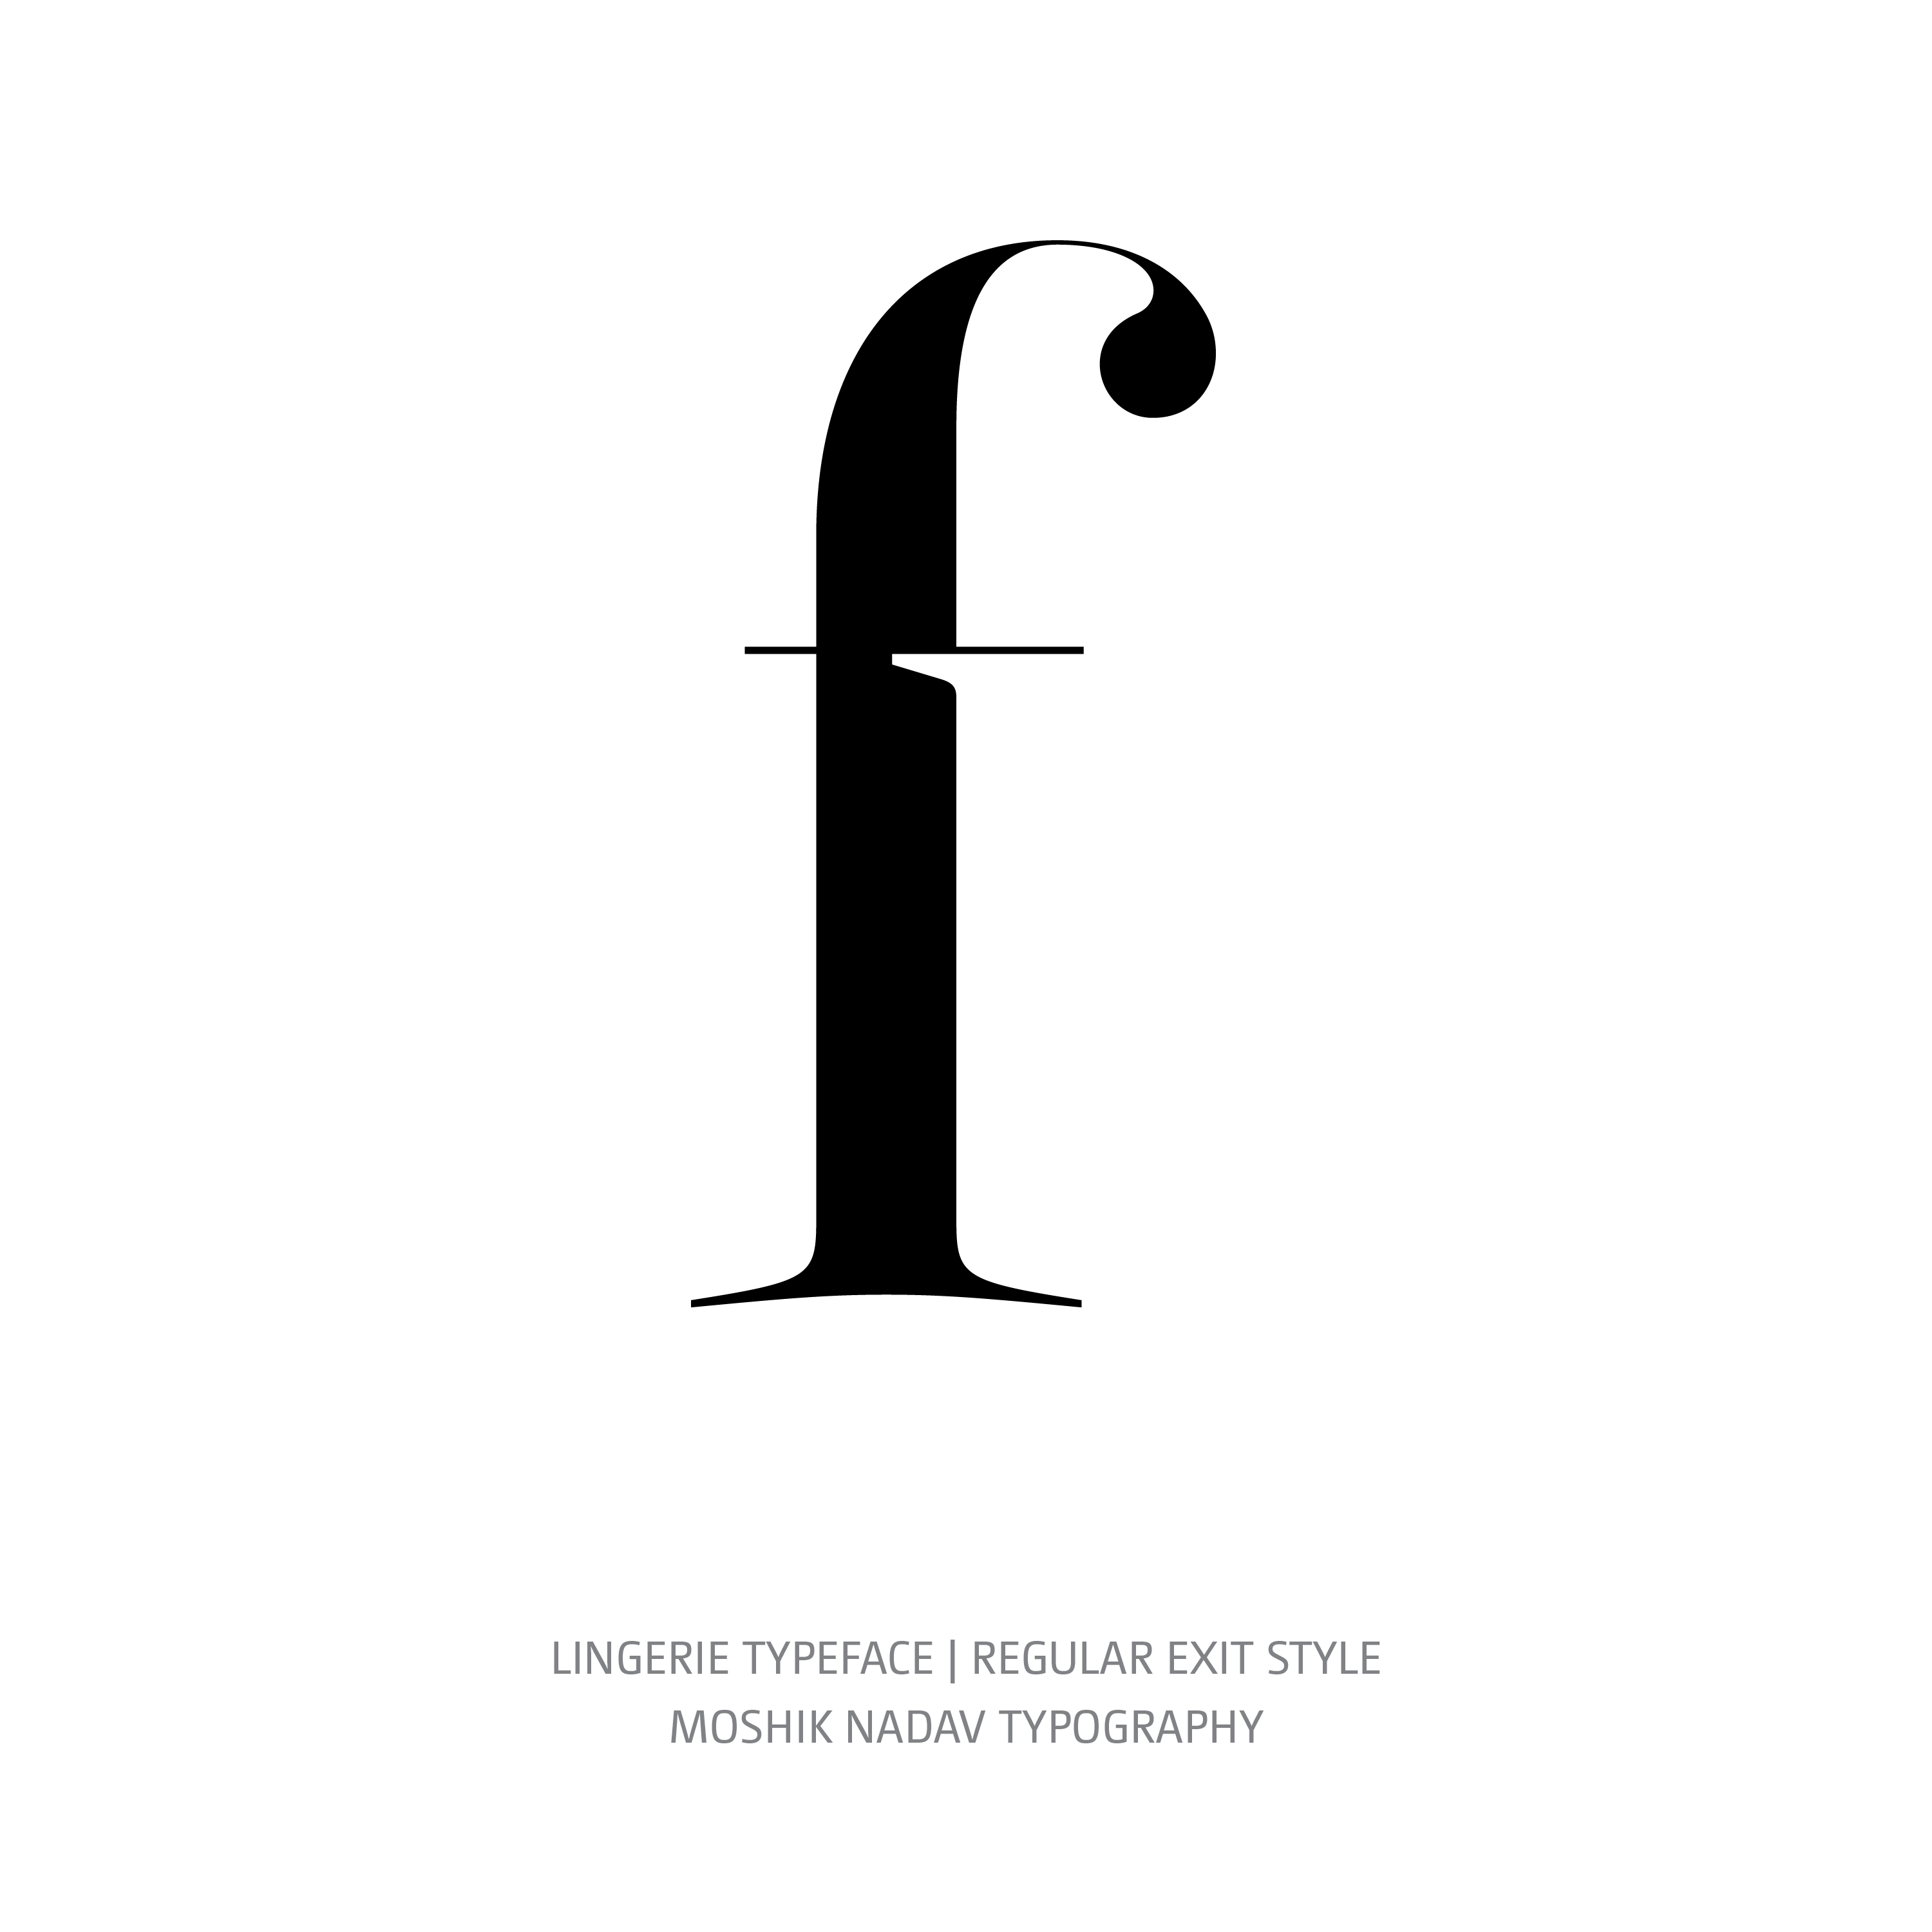 Lingerie Typeface Regular Exit f